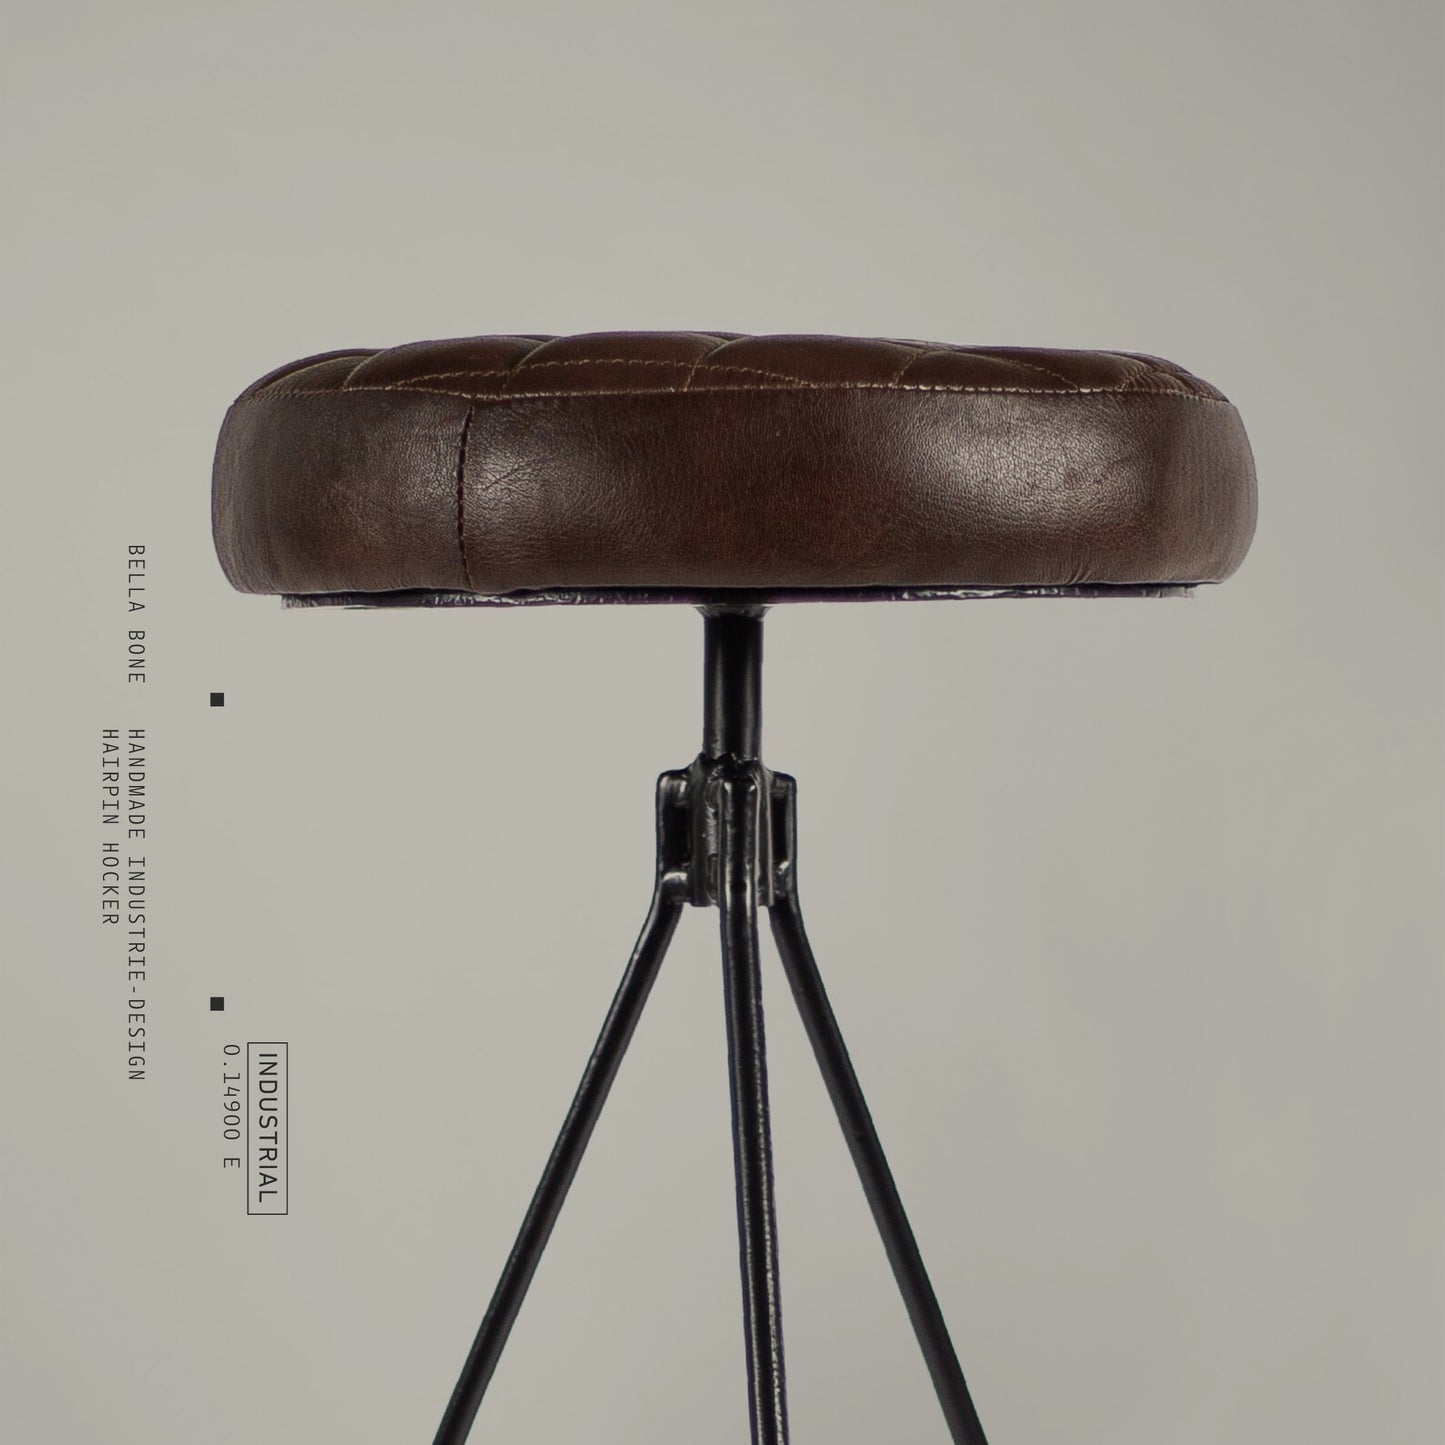 Bella Bone – Handmade industrial design stool made of metal with upholstered seat